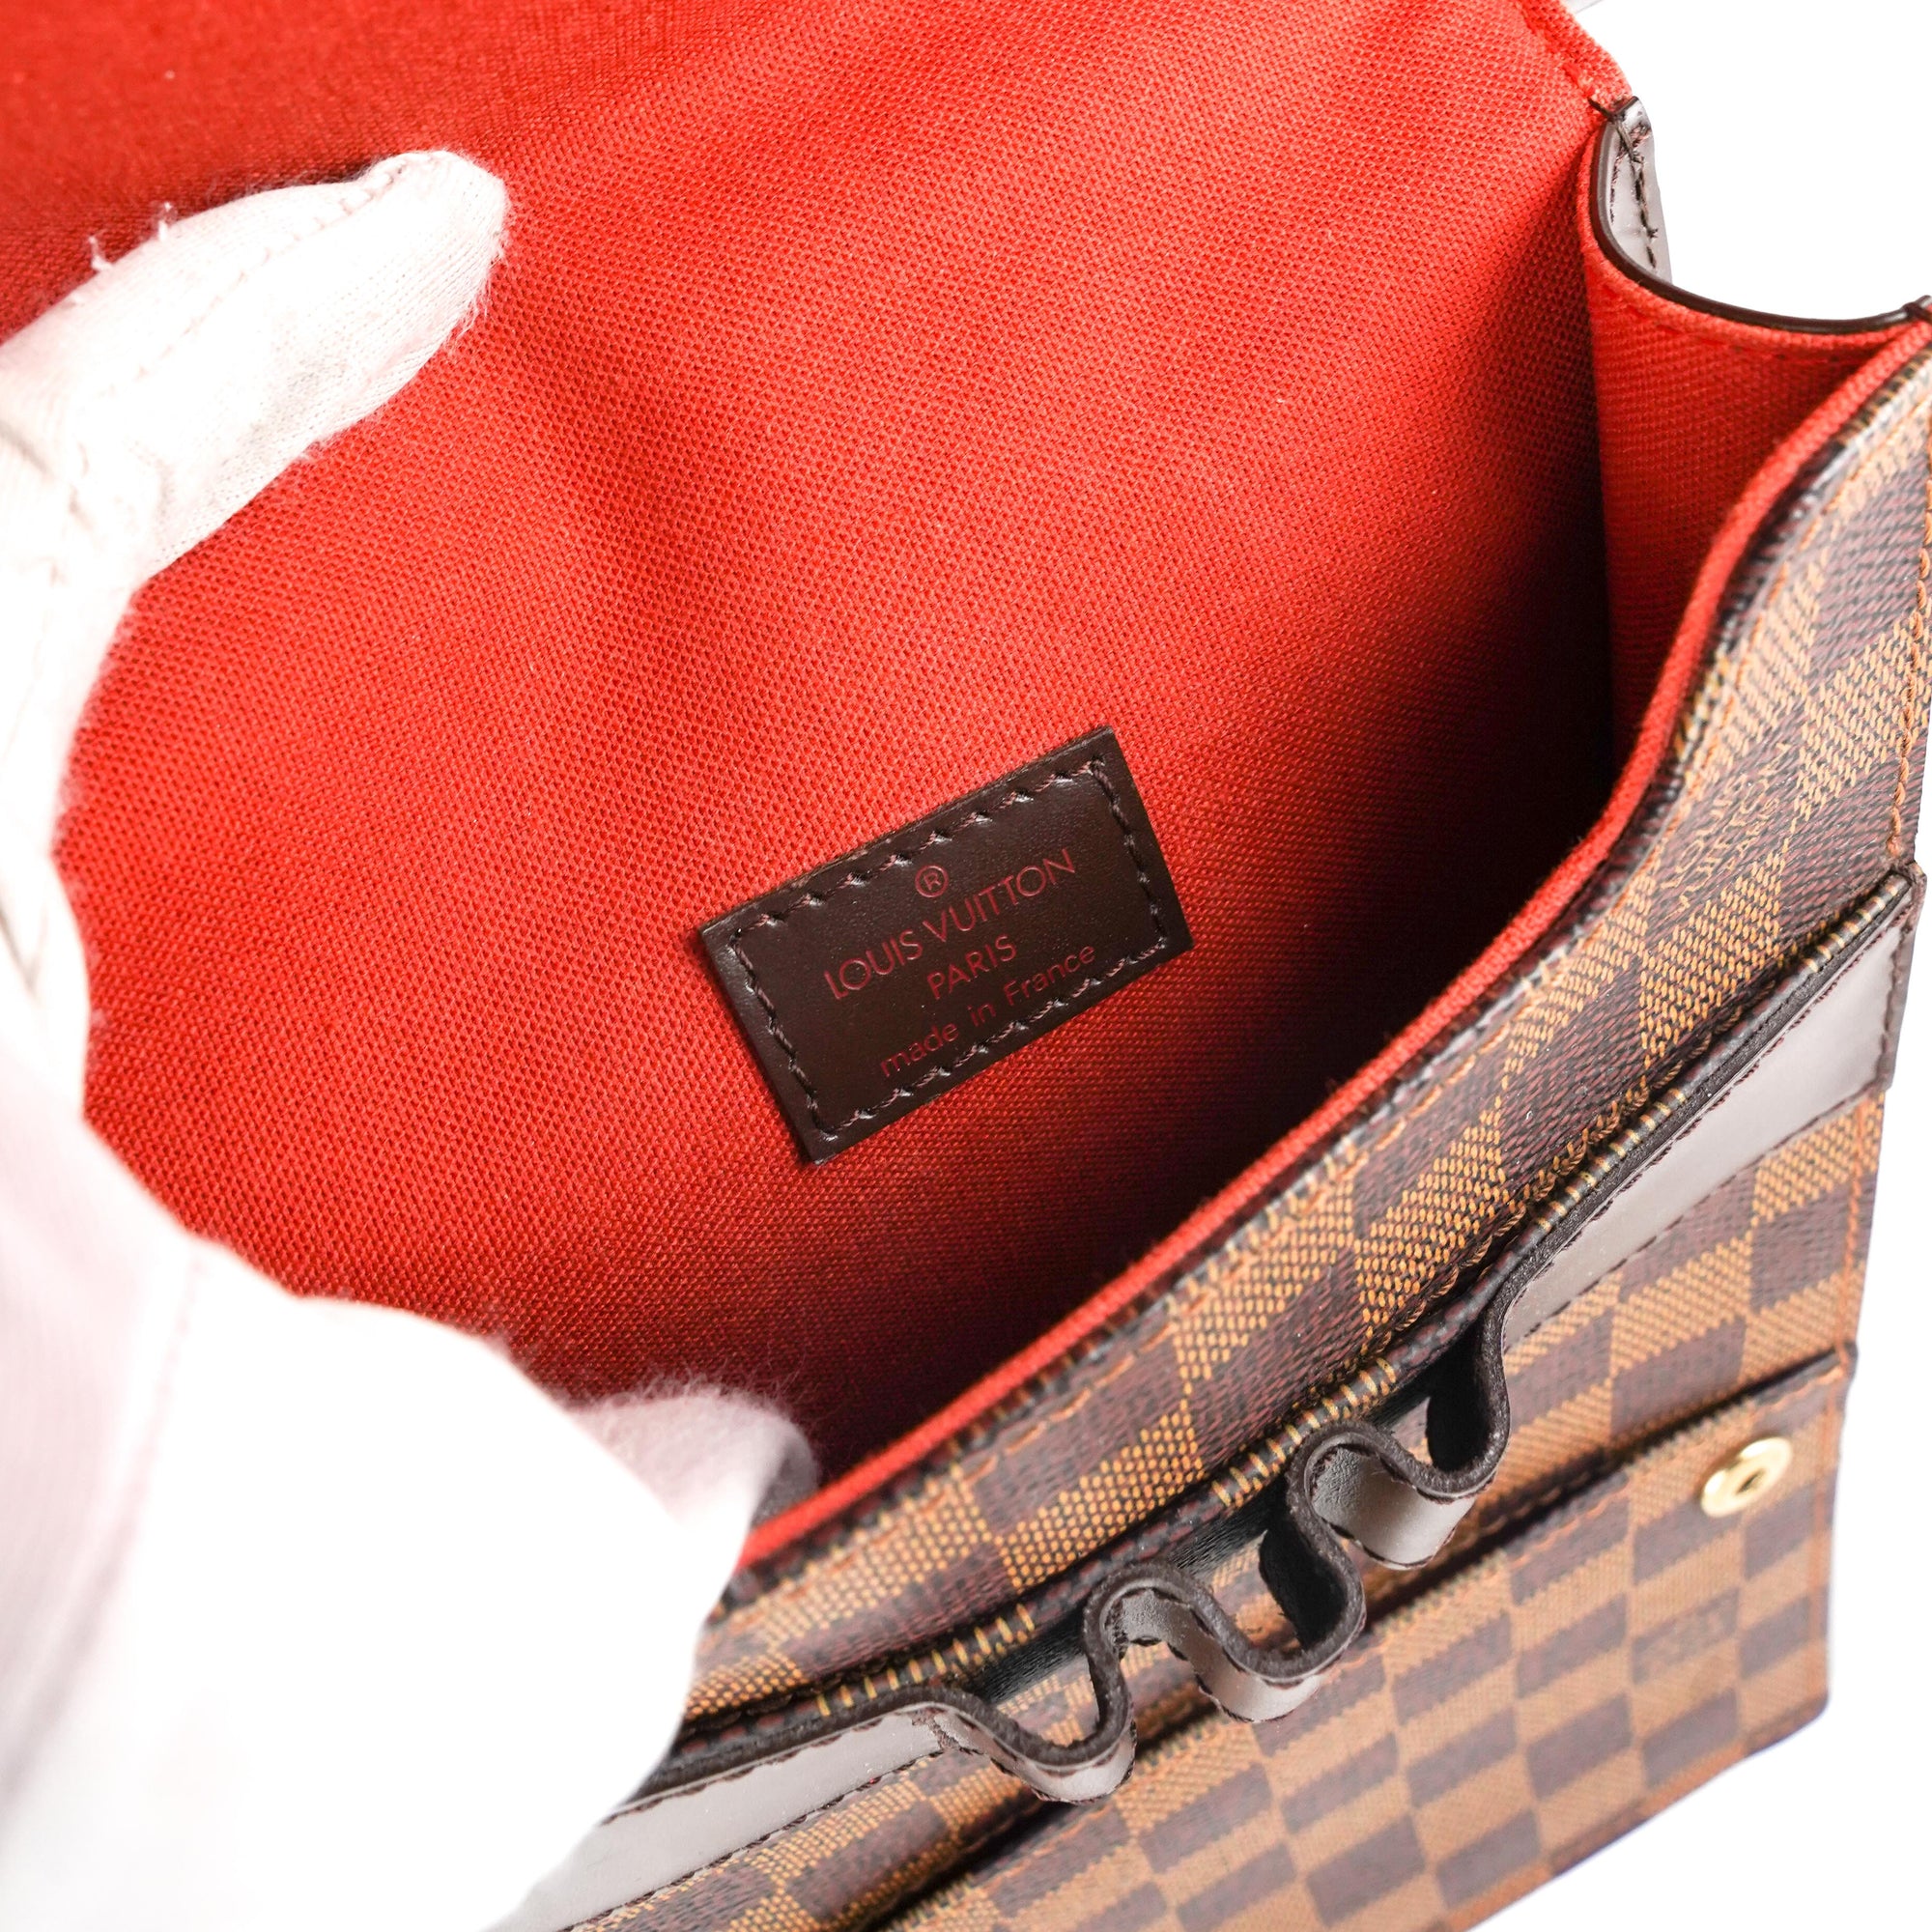 Louis Vuitton Cross-body Rectangular Bag Damier Ebene - THE PURSE